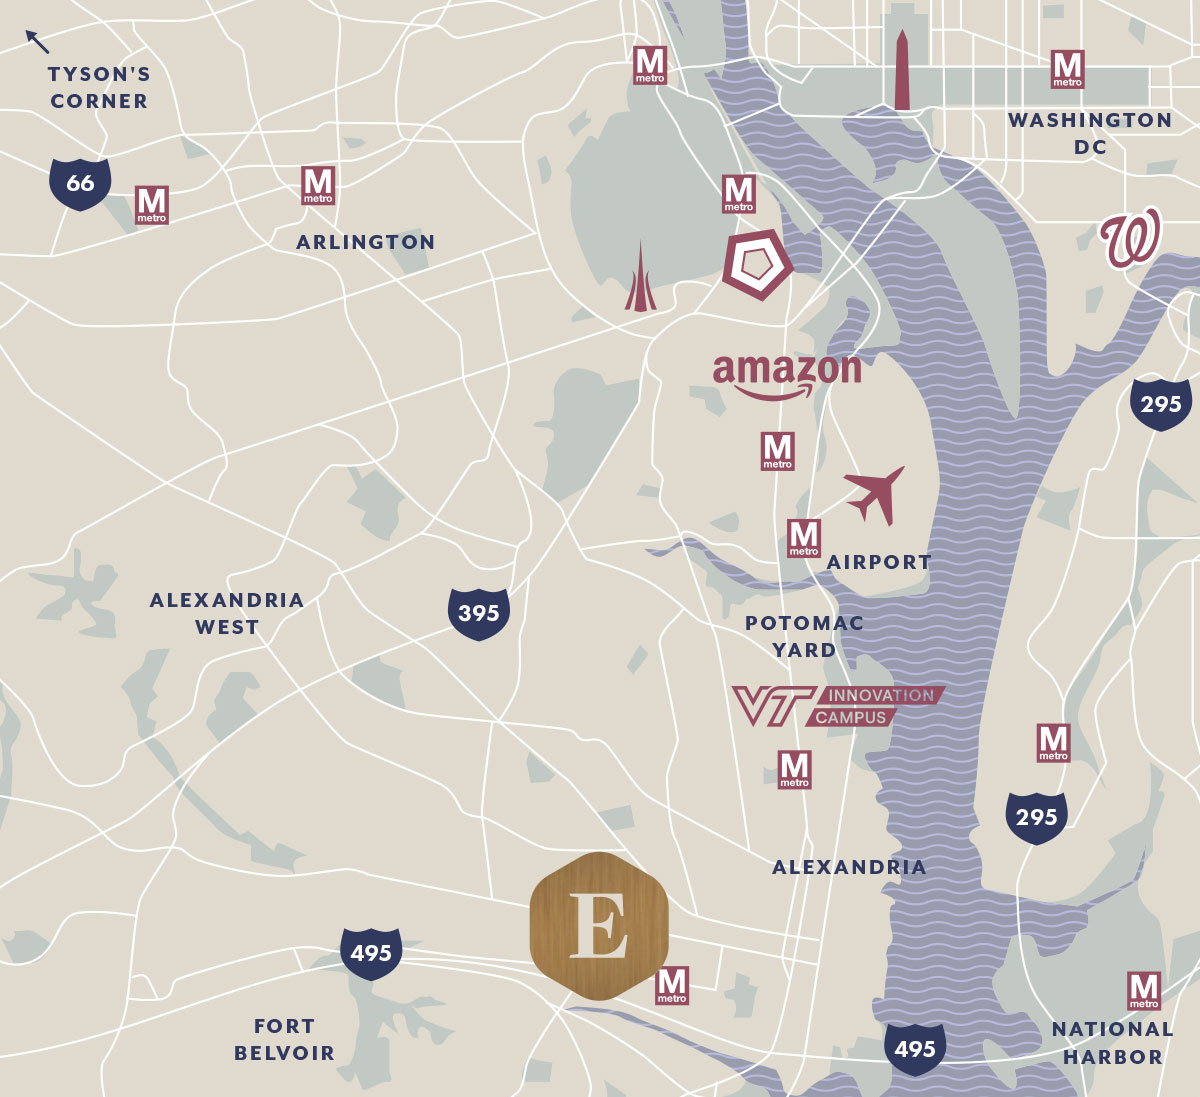 A map showing Easton's proximity to landmarks aroud Alexandria, Arlington, and DC